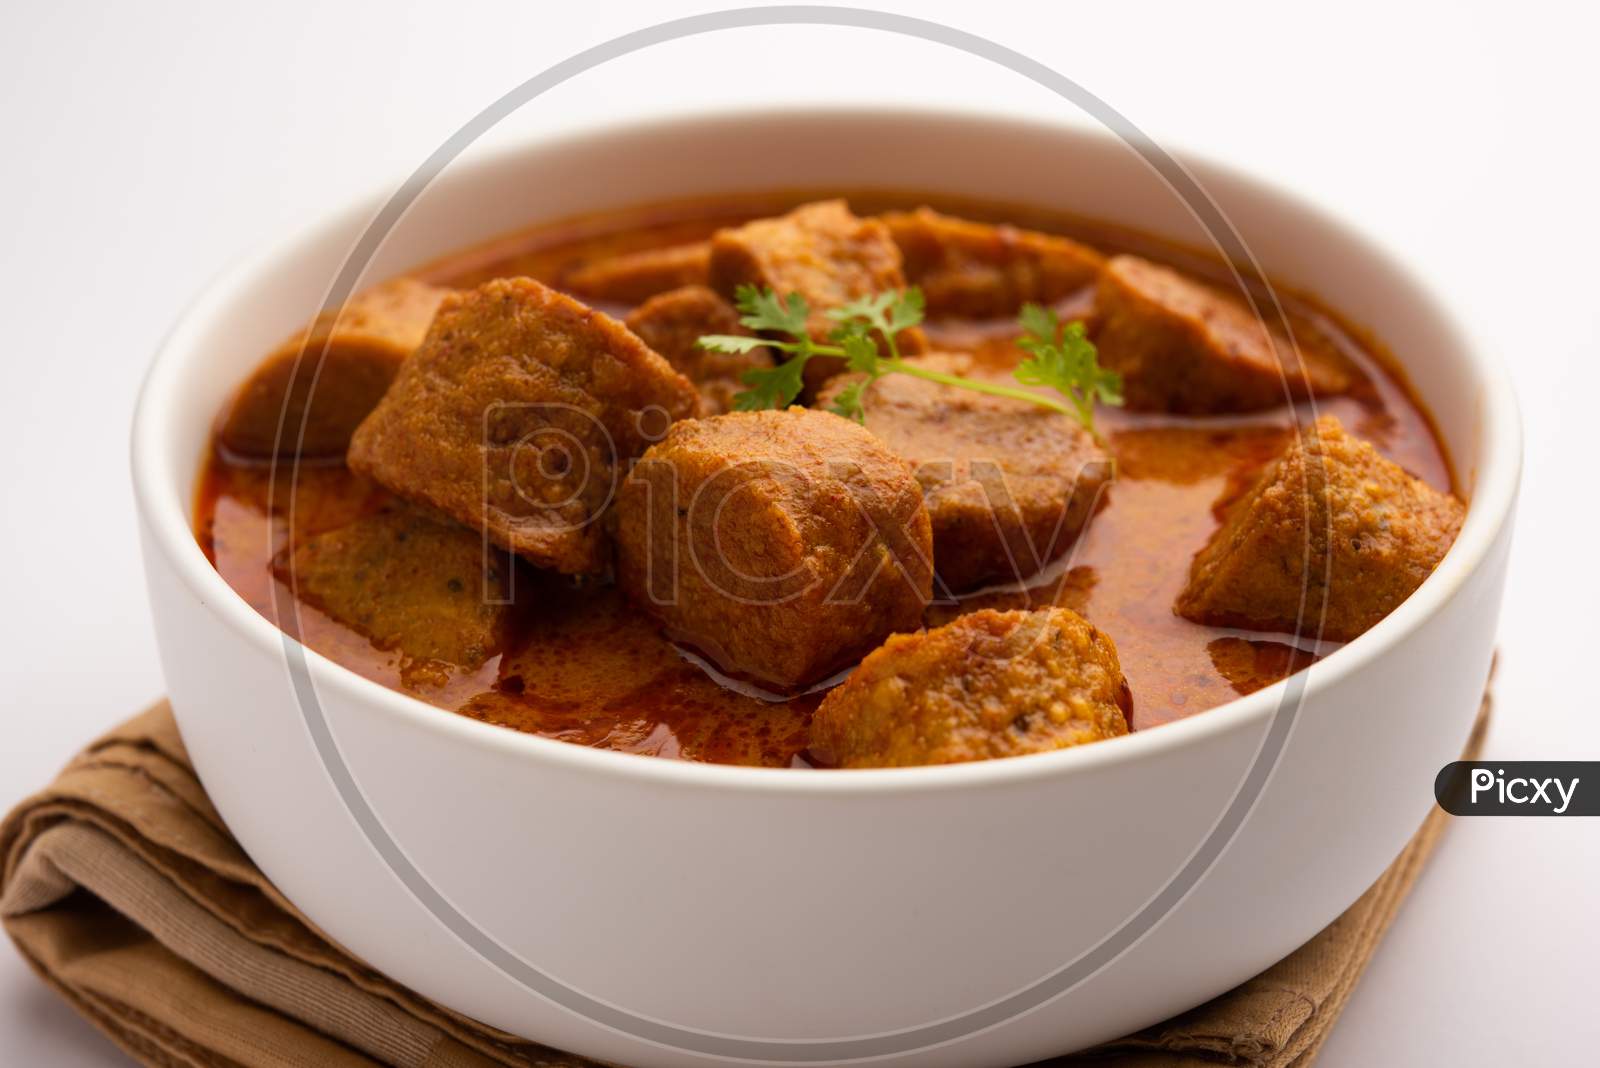 Besan Gatte Ki Sabzi Or Gatta Curry Recipe, Popular Rajasthani Menu For Lunch Or Dinner